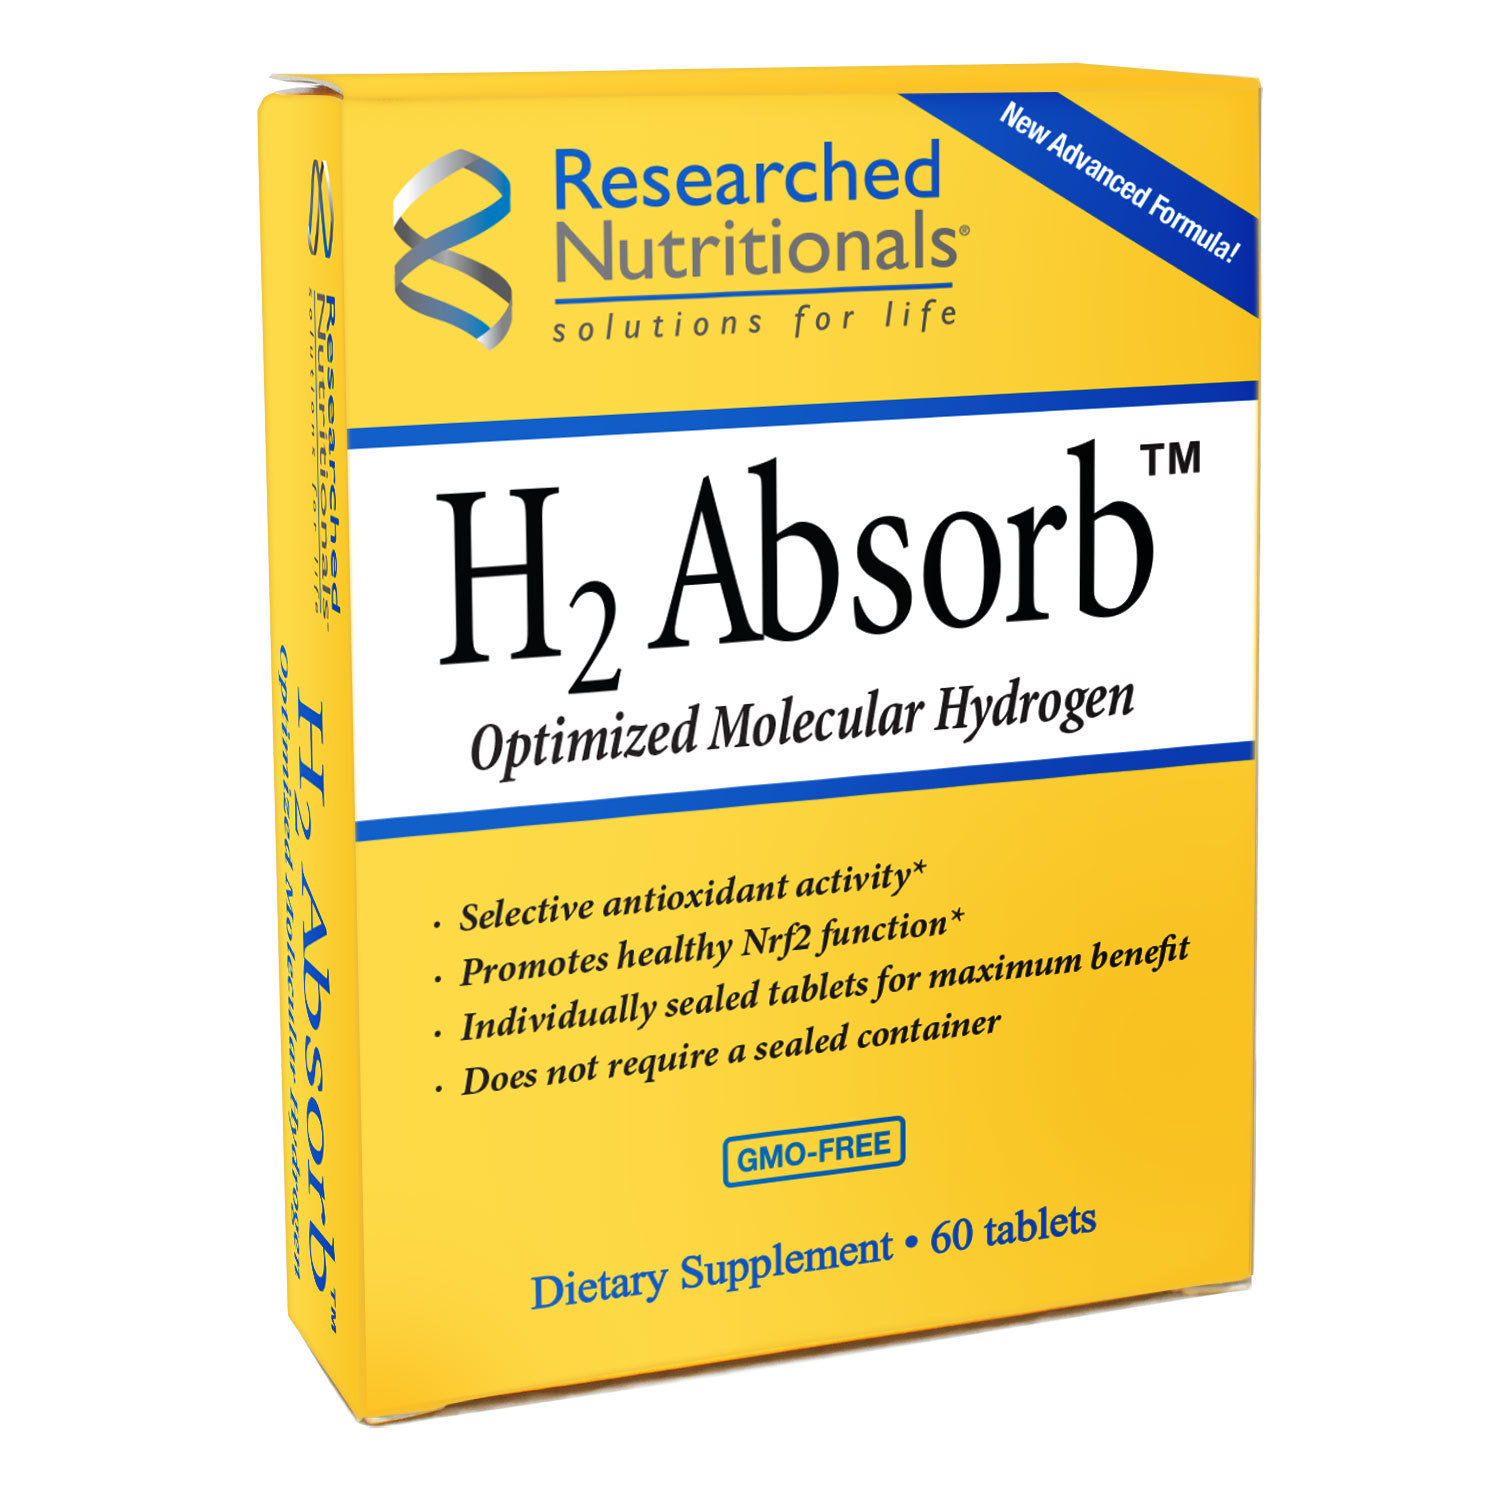 H2 Absorb™